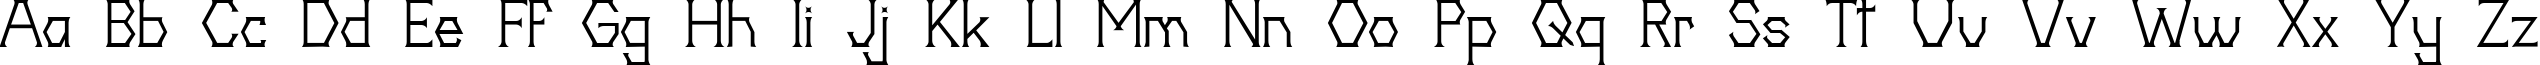 Пример написания английского алфавита шрифтом 20th Centenary Faux